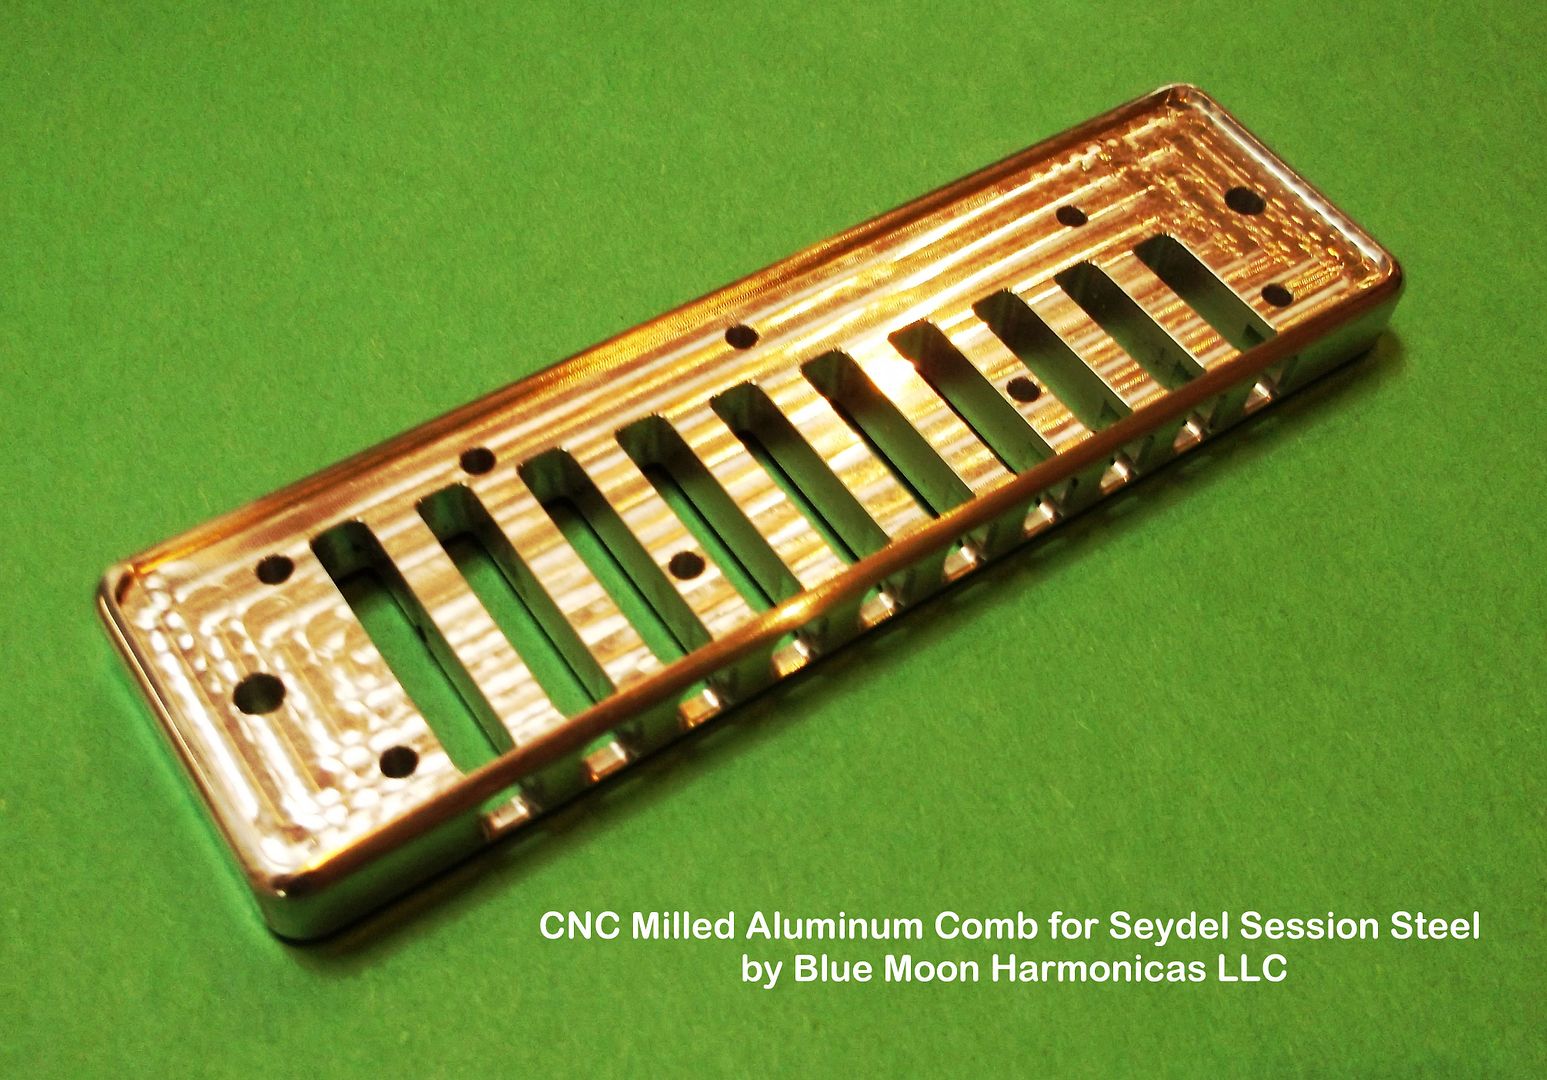 Milled Aluminum Comb for Seydel Session Steel photo 3a_zps6faf3f73.jpg